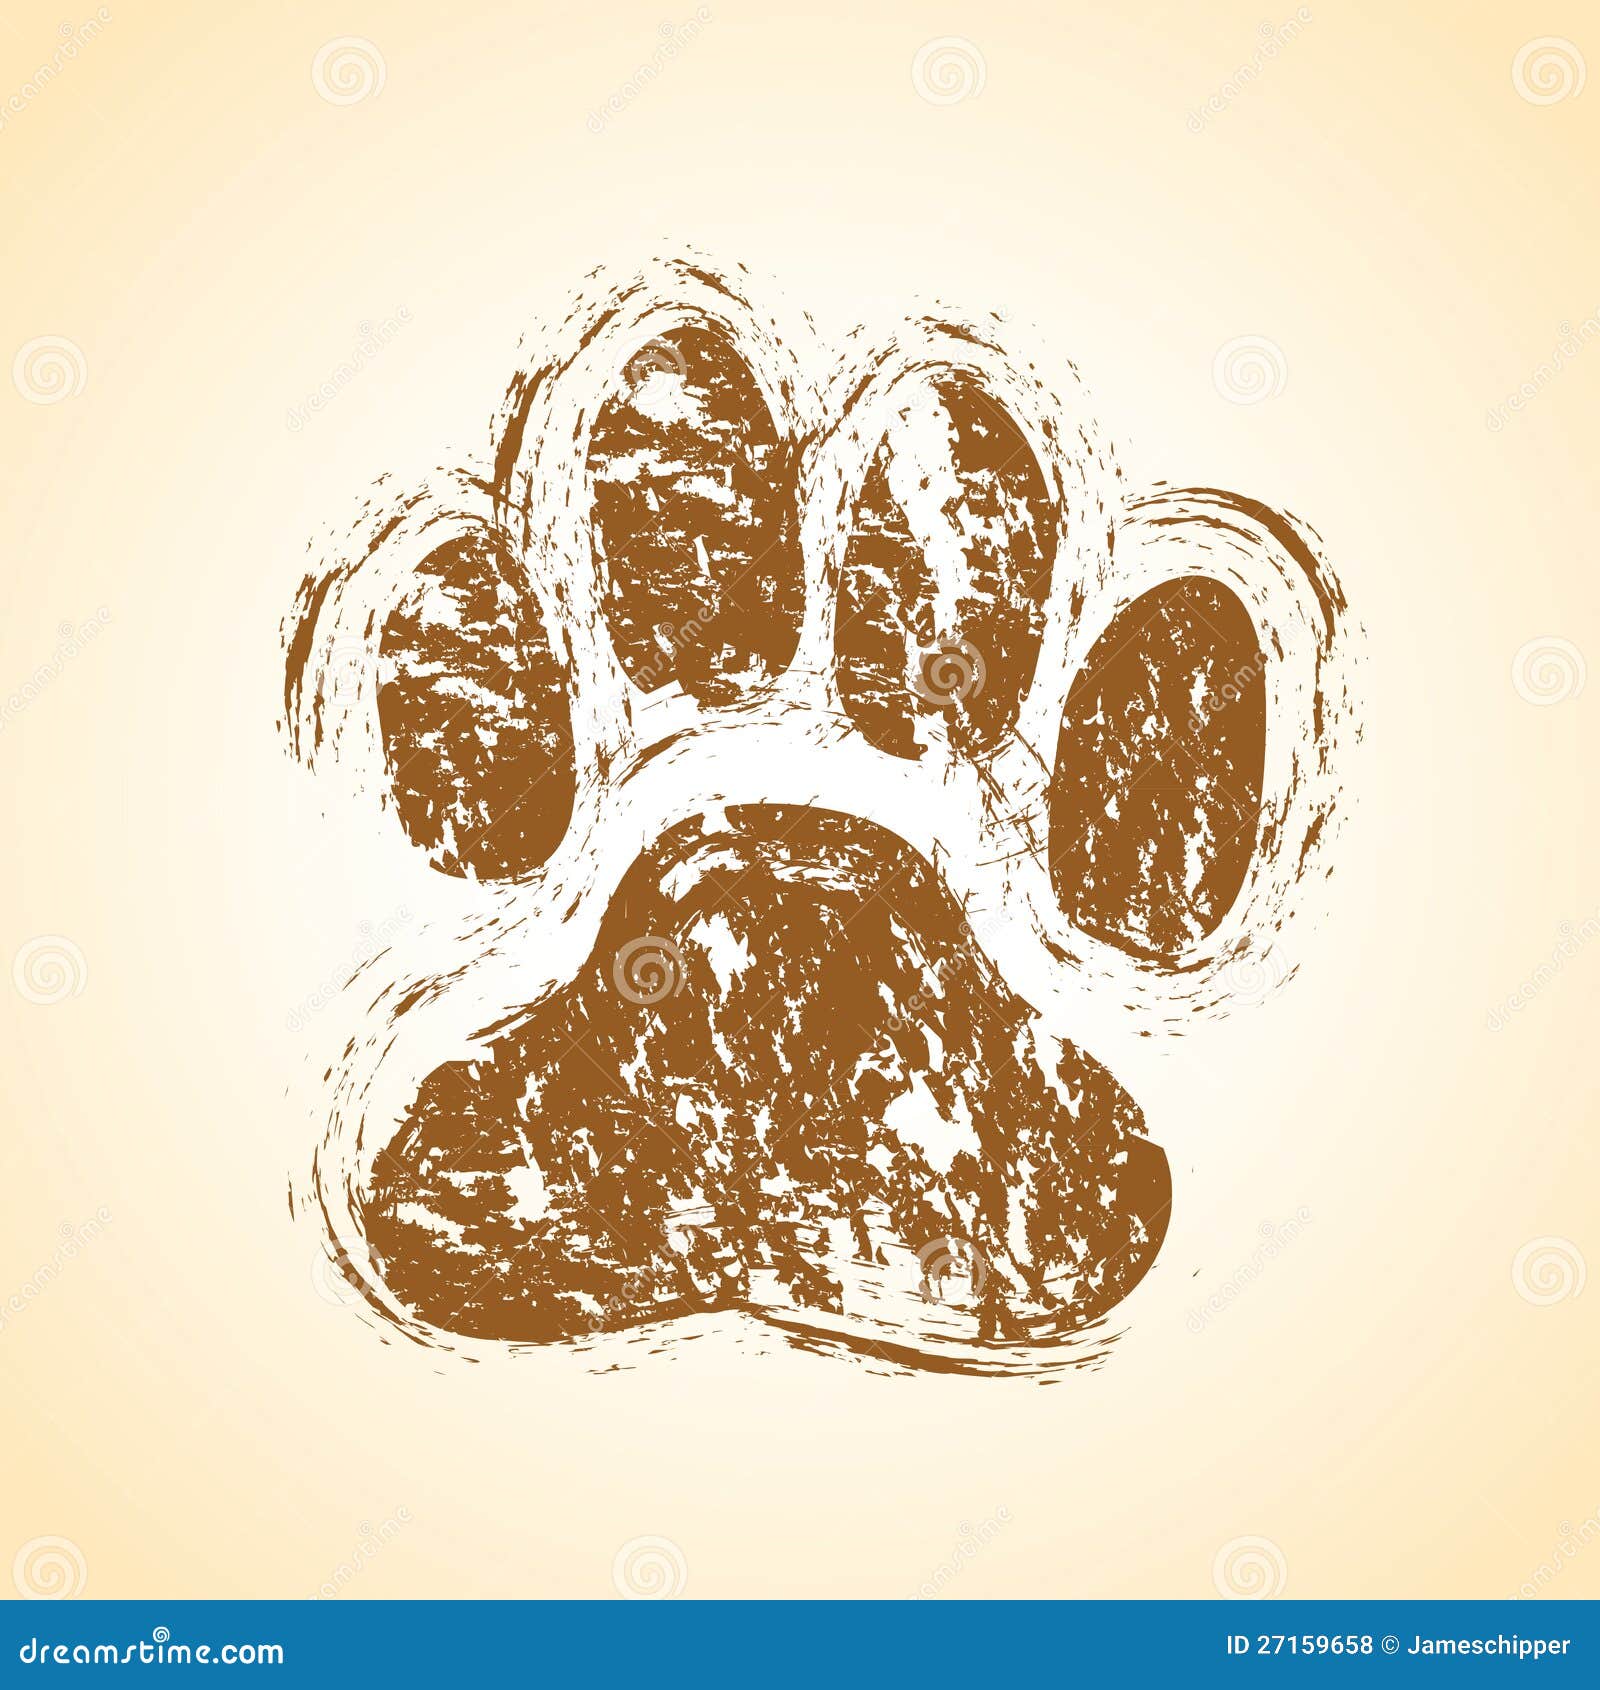 Dog paw stock vector. Illustration of footstep, grunge - 27159658